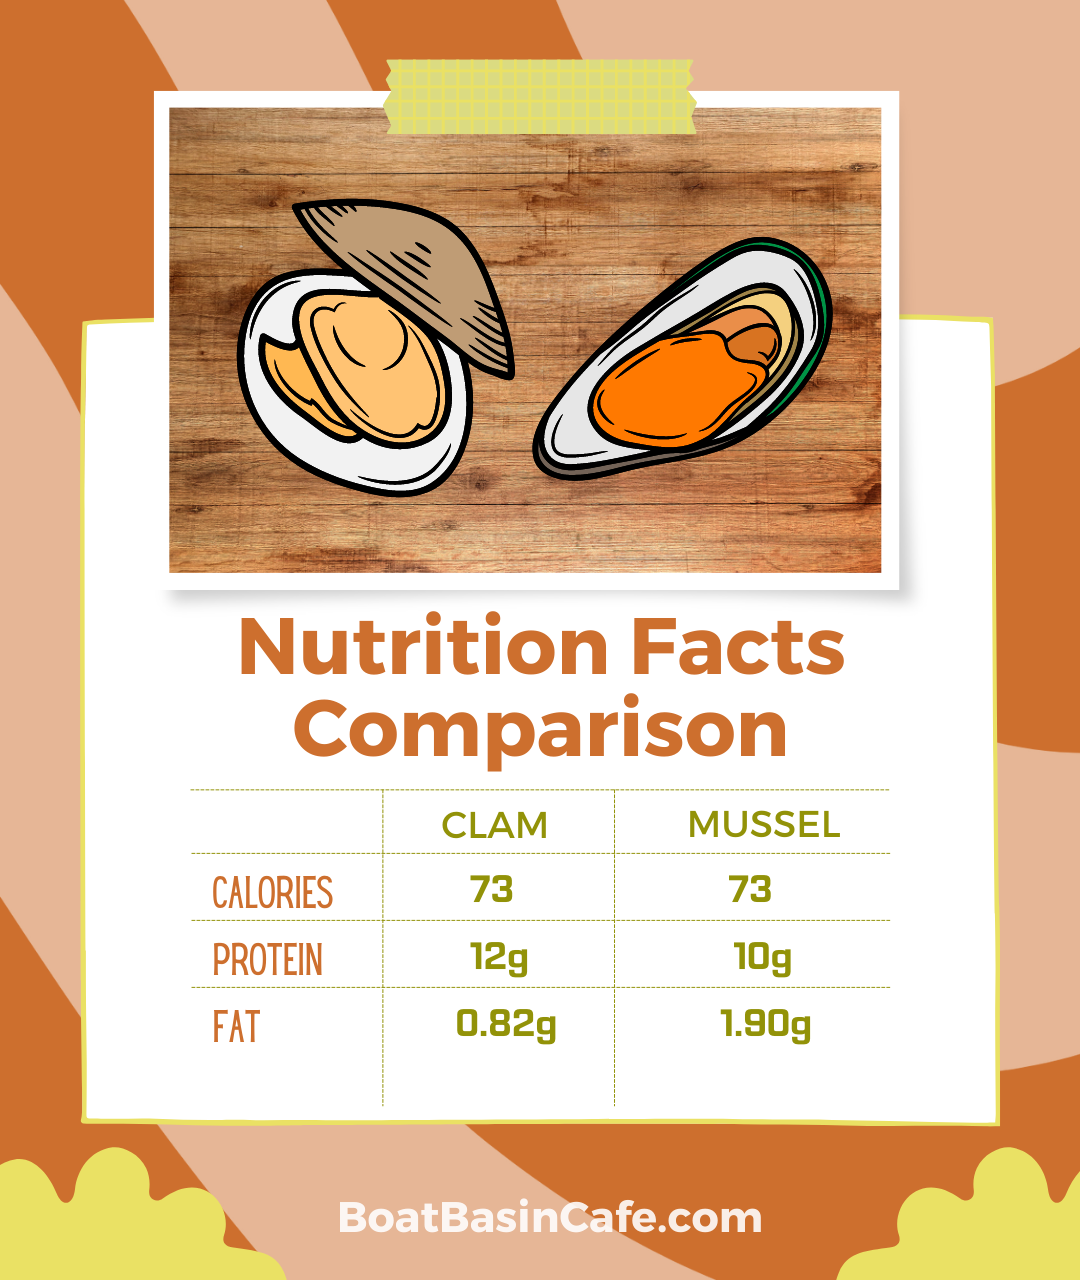 Nutrition Facts Comparison: Clam vs Mussel